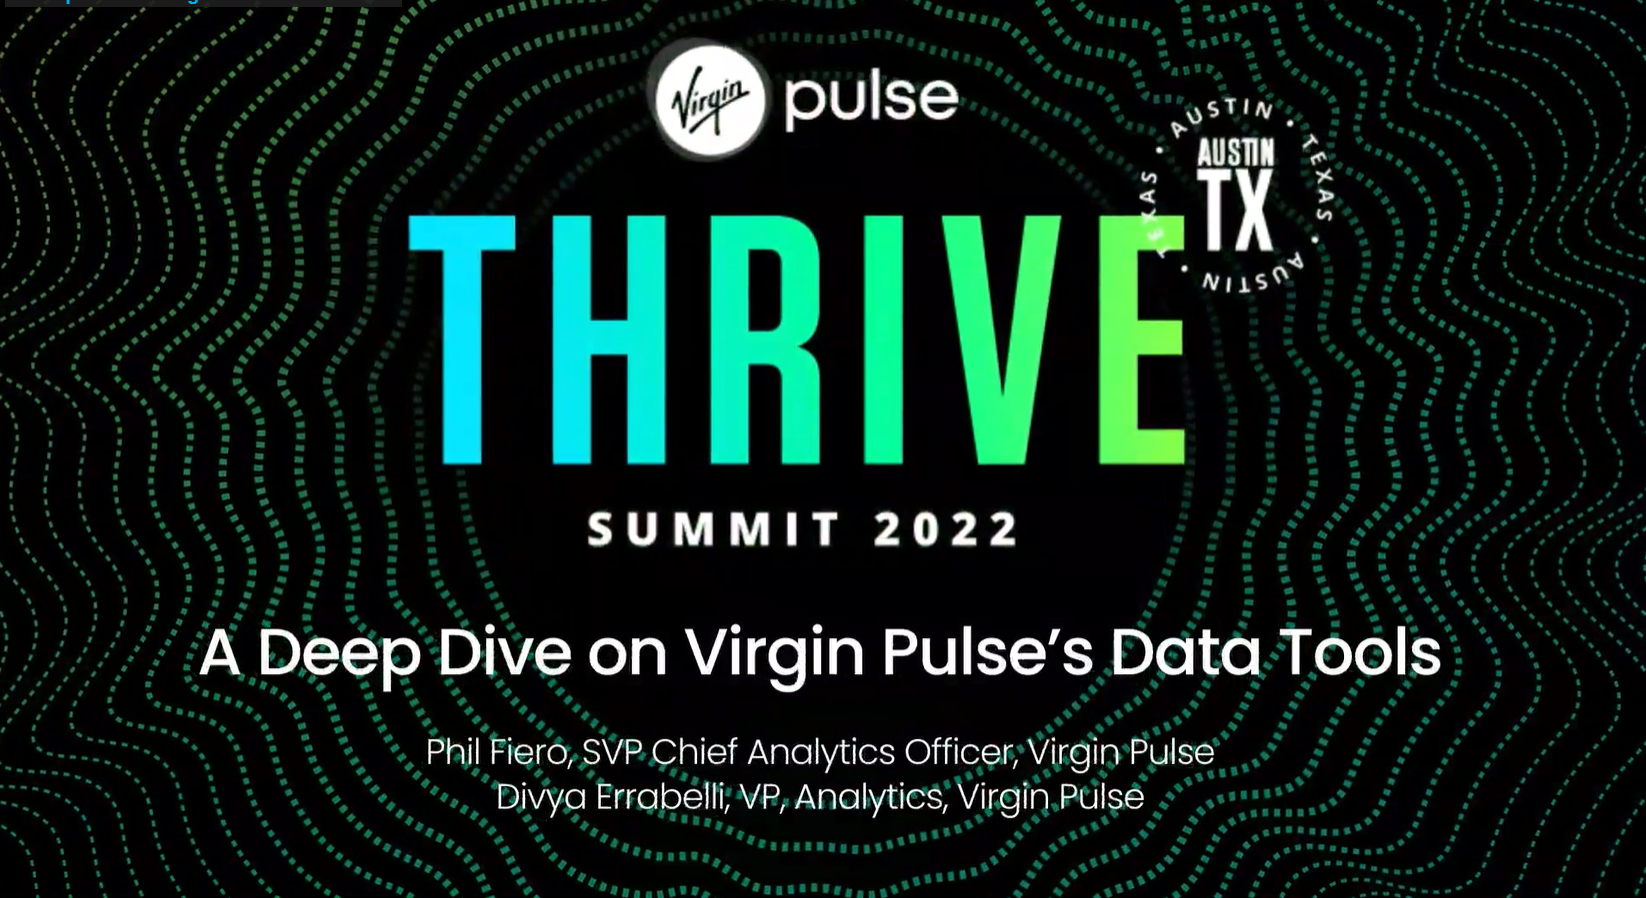 A Deep Dive on Virgin Pulse’s Data Tools